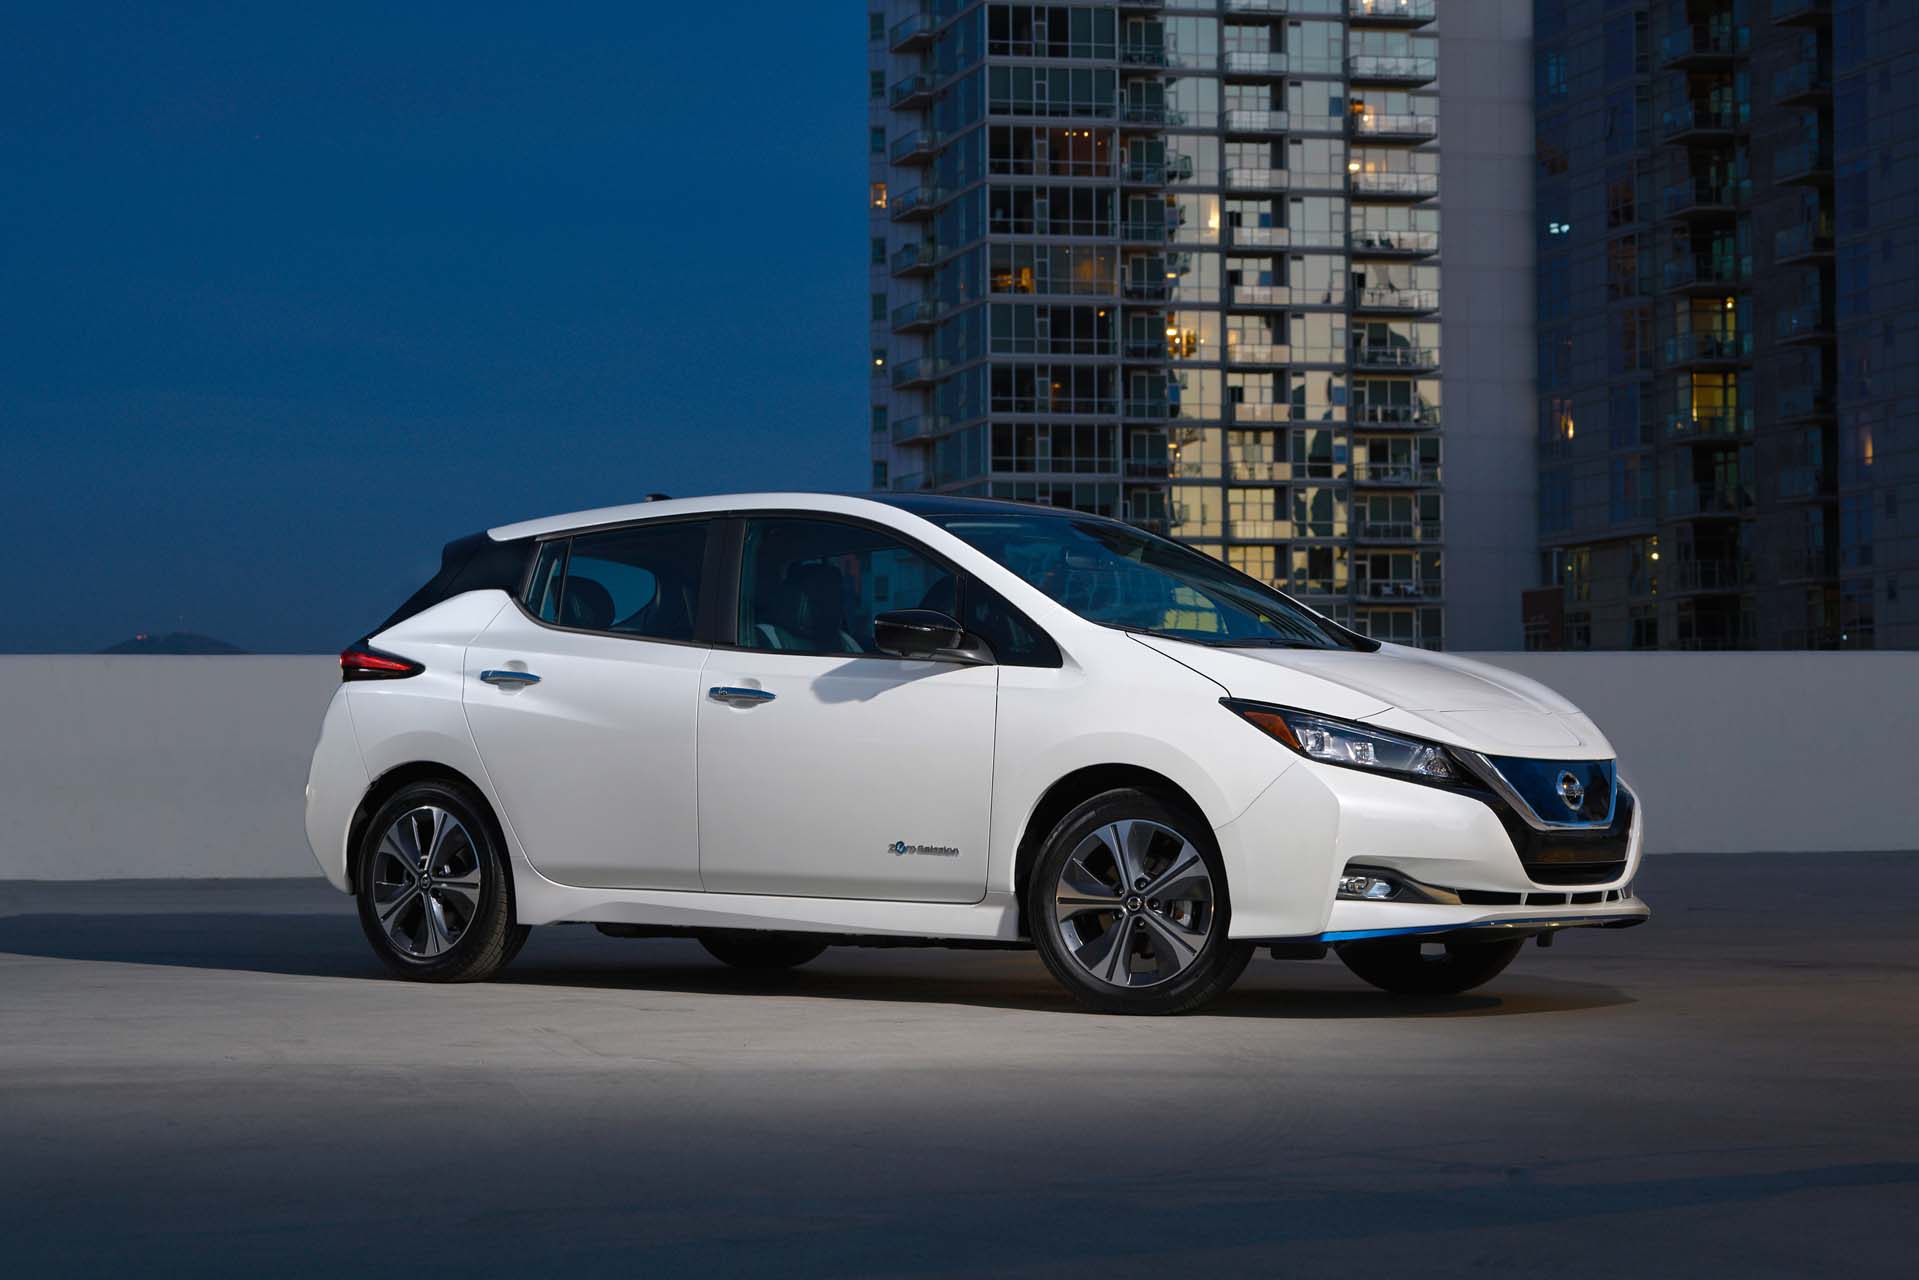 More powerful, 226-mile range 2019 Nissan Leaf Plus electric car unveiled  at CES